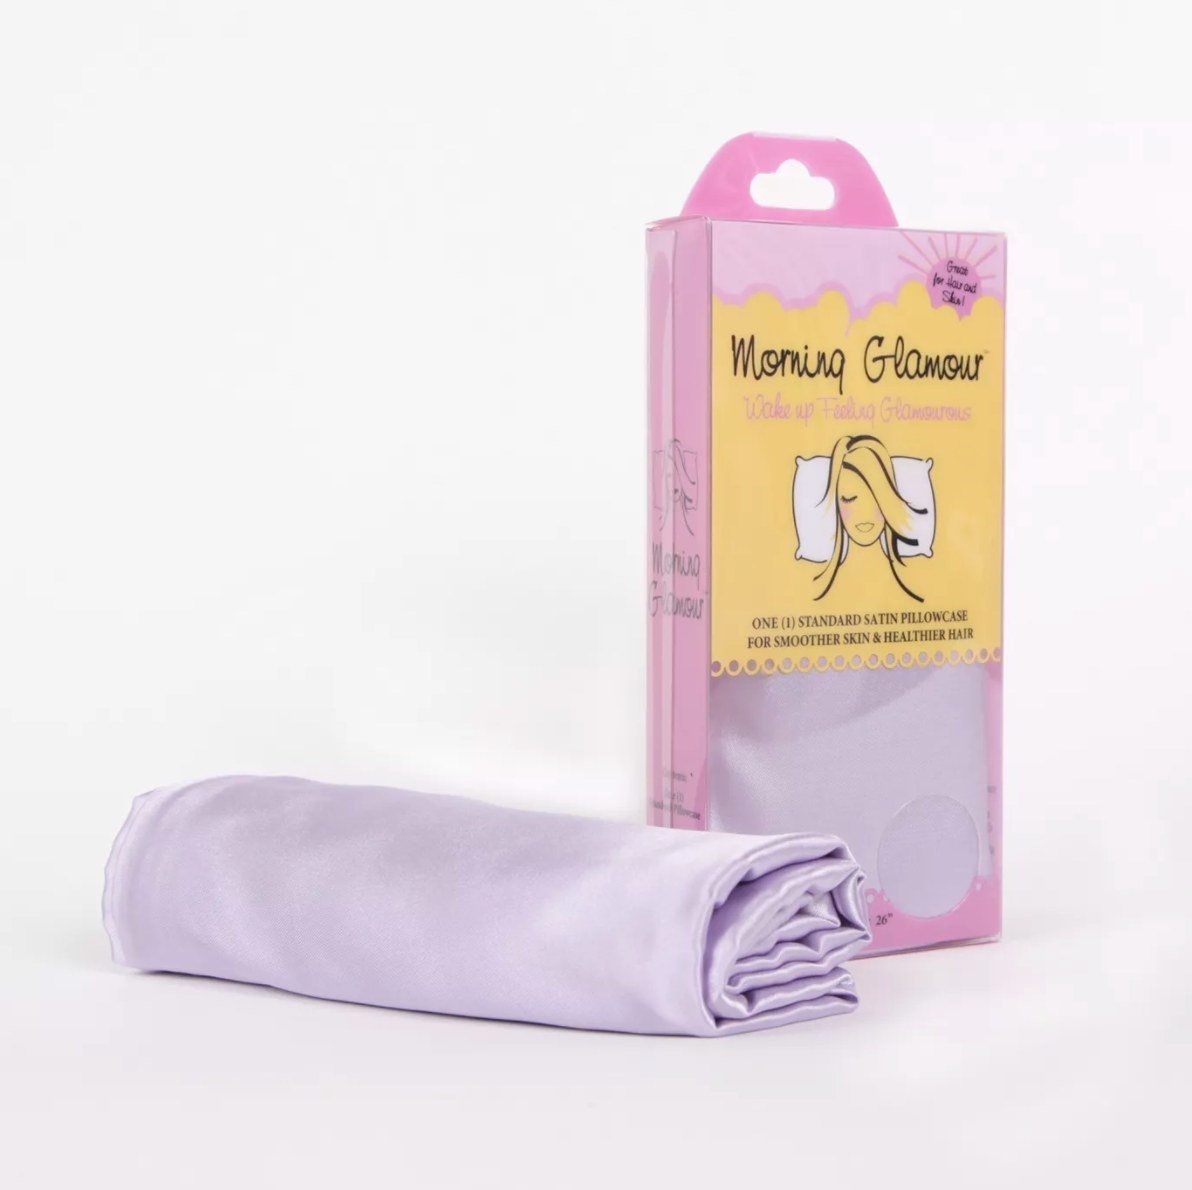 The lilac-colored silk pillowcase